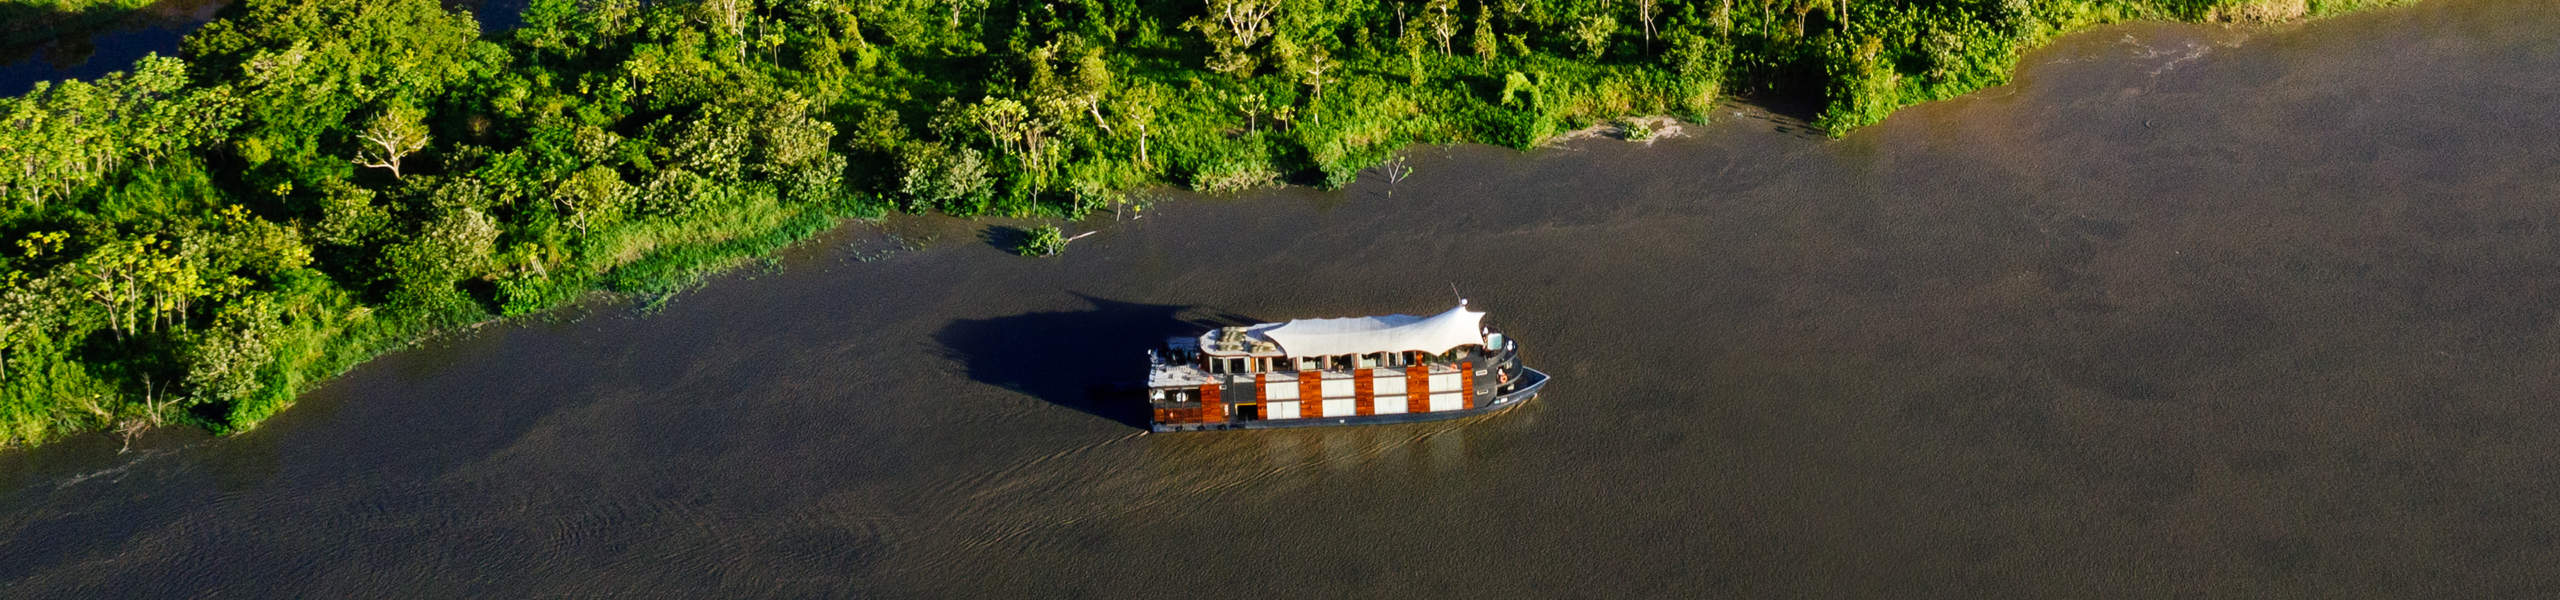 Amazon River Private Charter | Aqua Expeditions